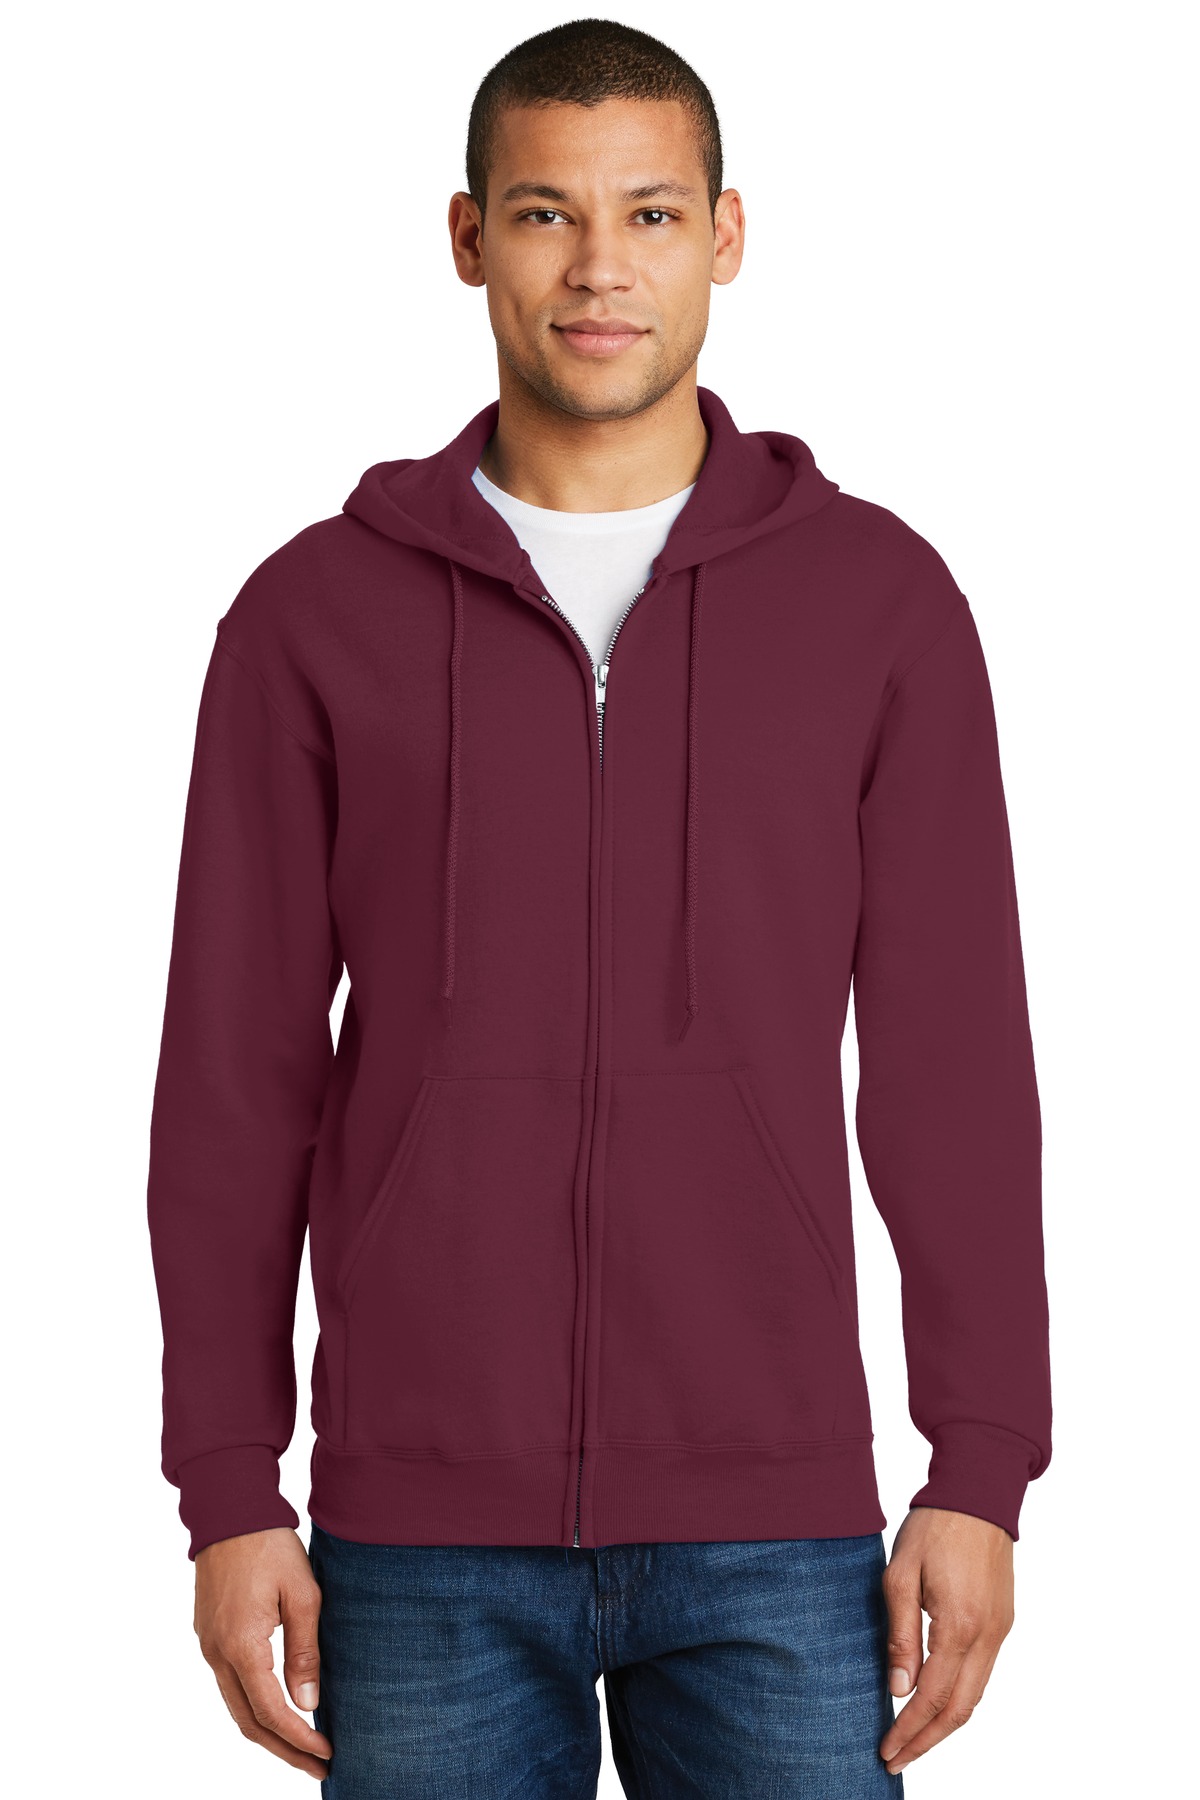 Jerzees® - NuBlend® Full-Zip Hooded Sweatshirt.-Jerzees